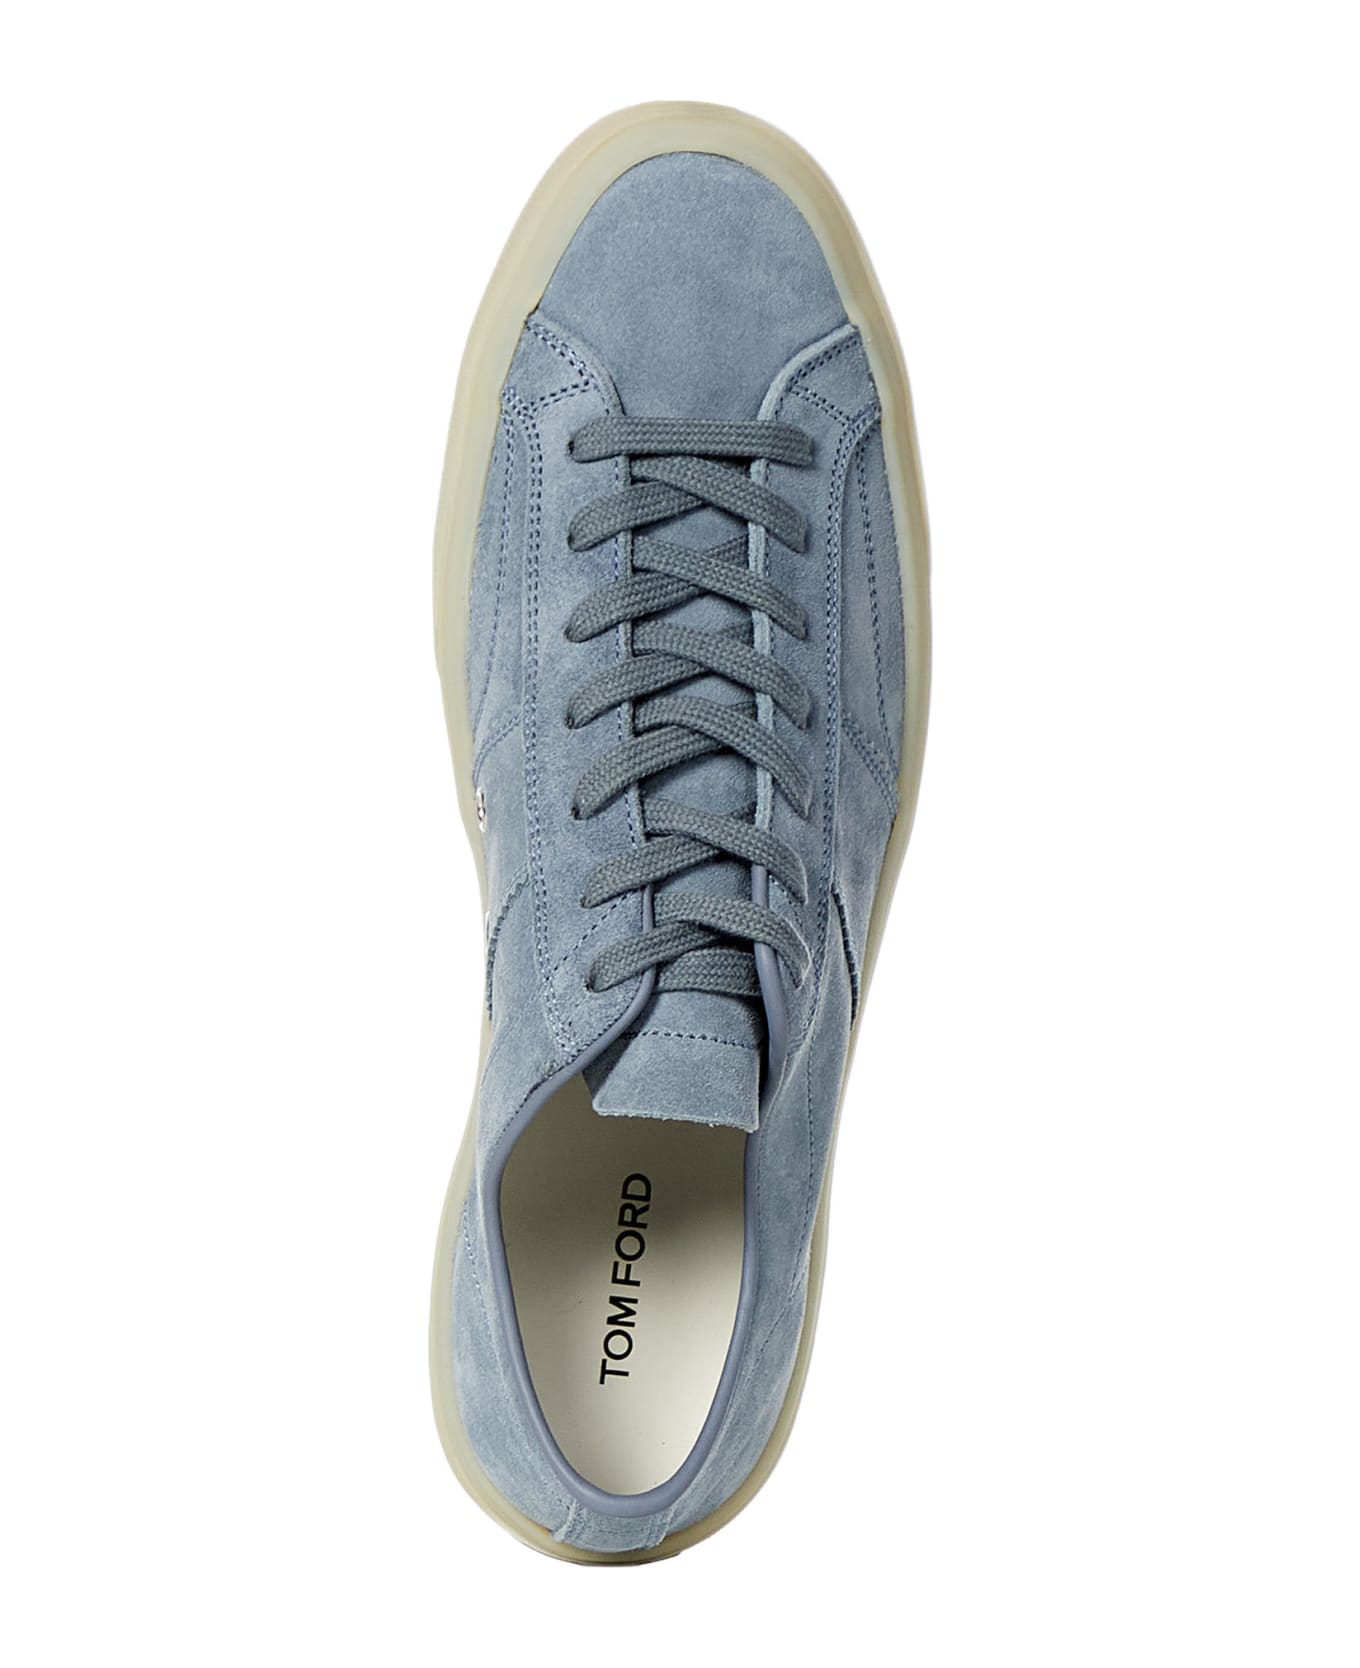 Tom Ford Cambridge Sneakers - Blu bianco